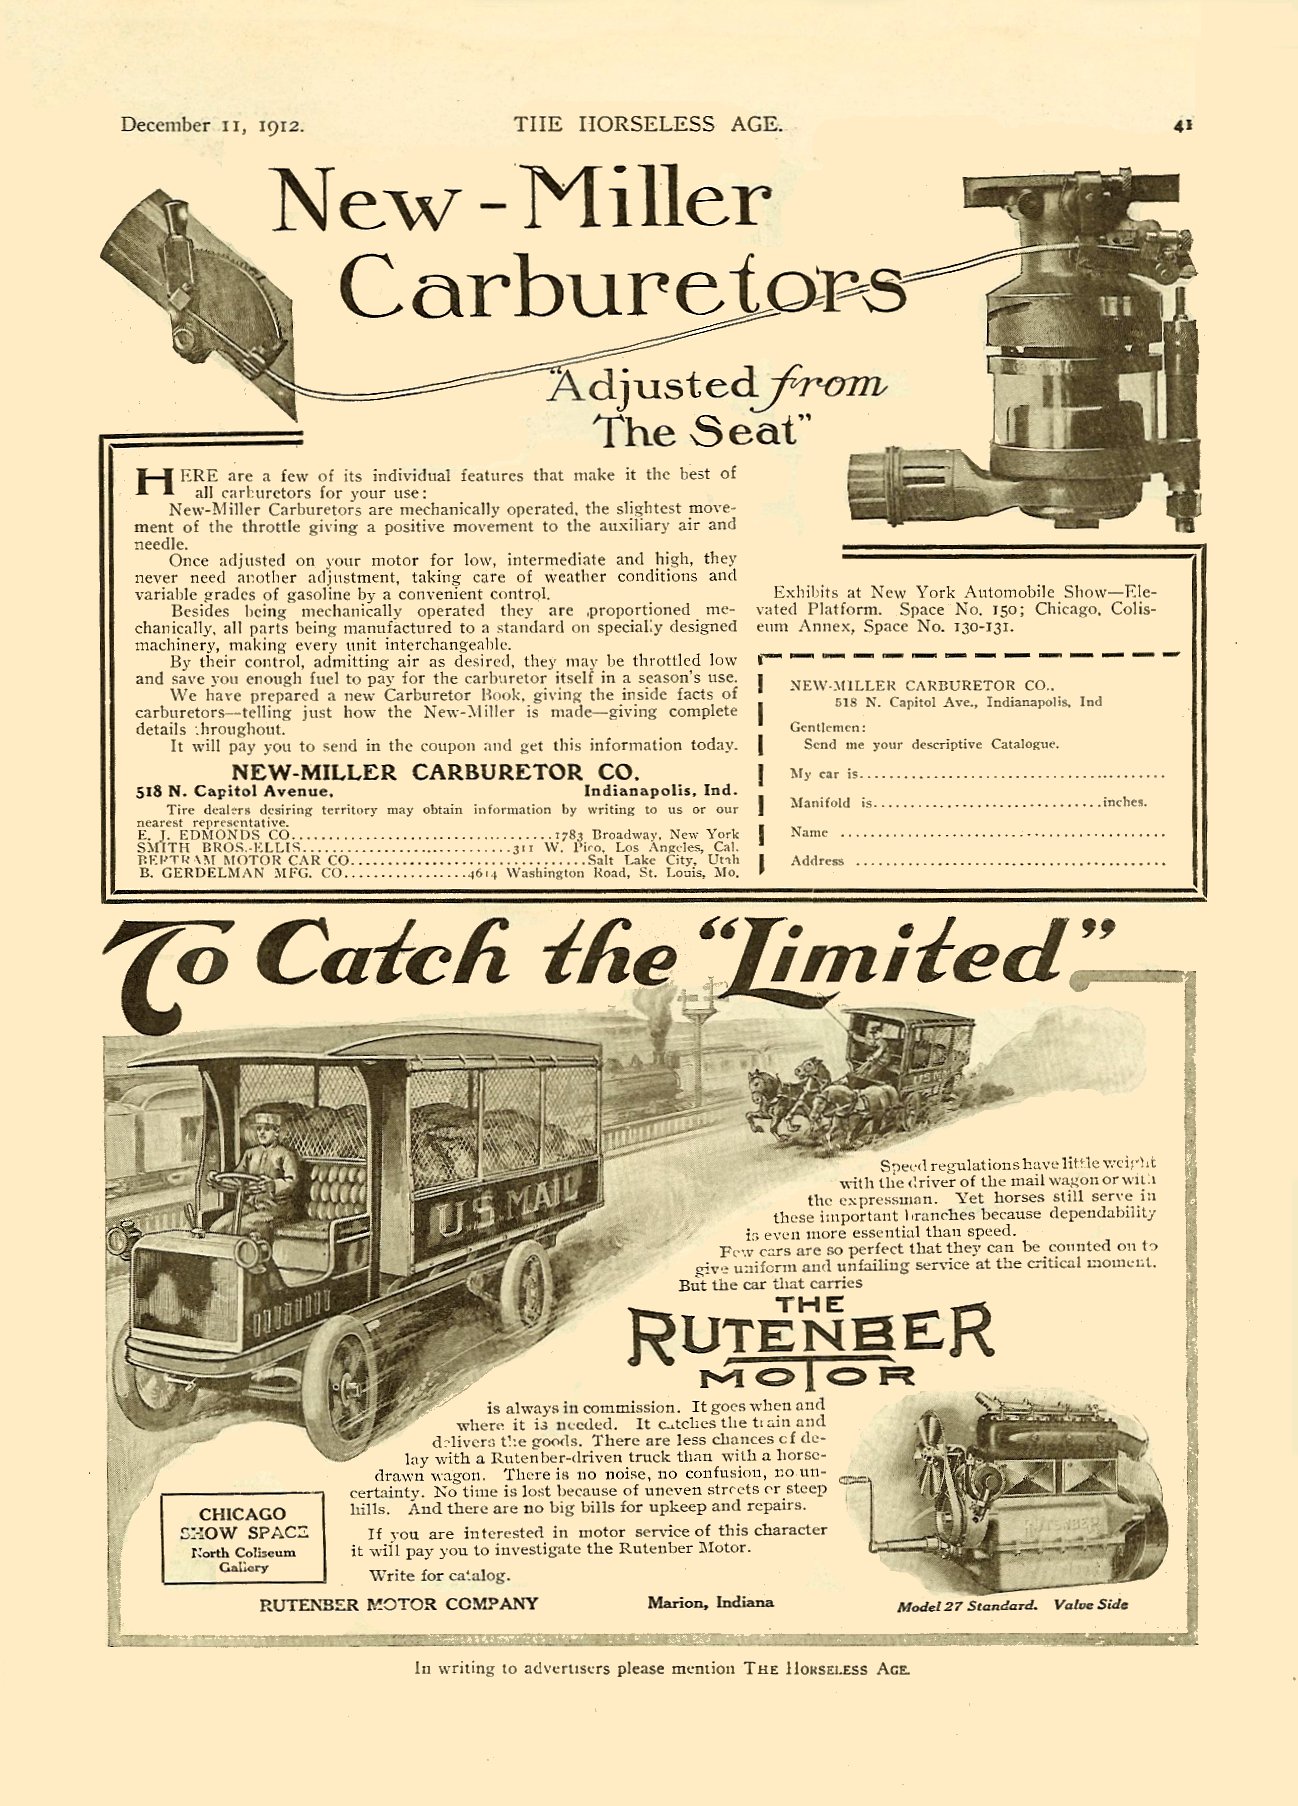 RUTENBER Motors Archives - Chuck's Toyland